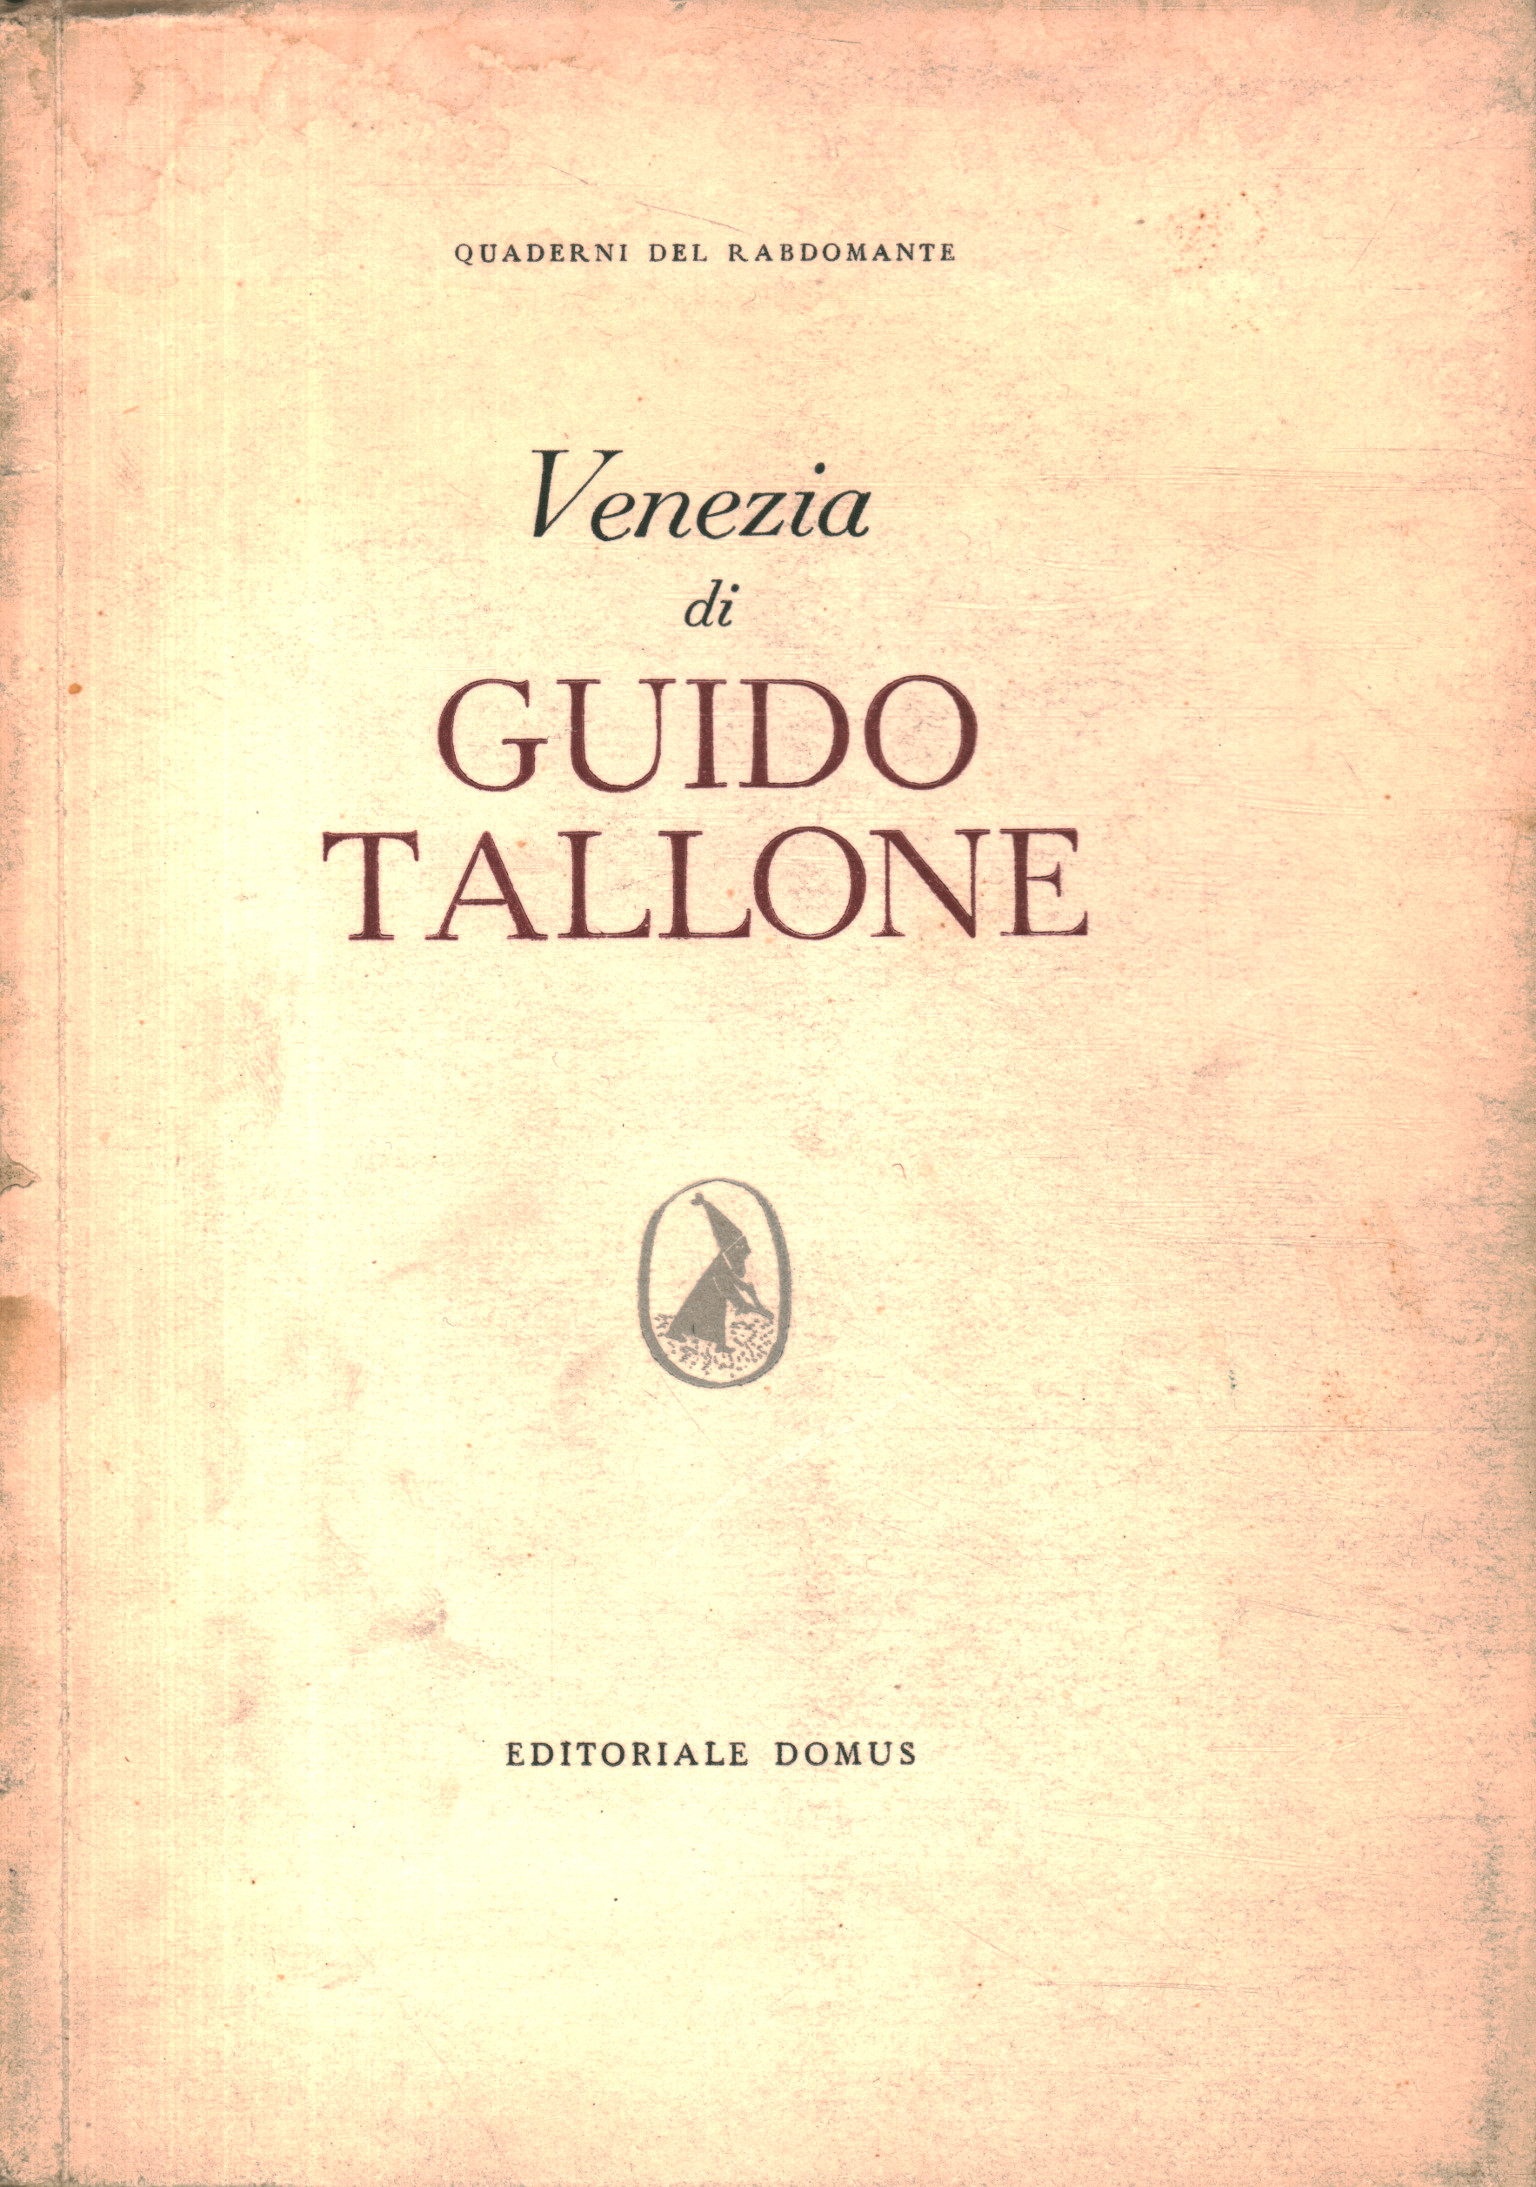 Venecia de Guido Tallone